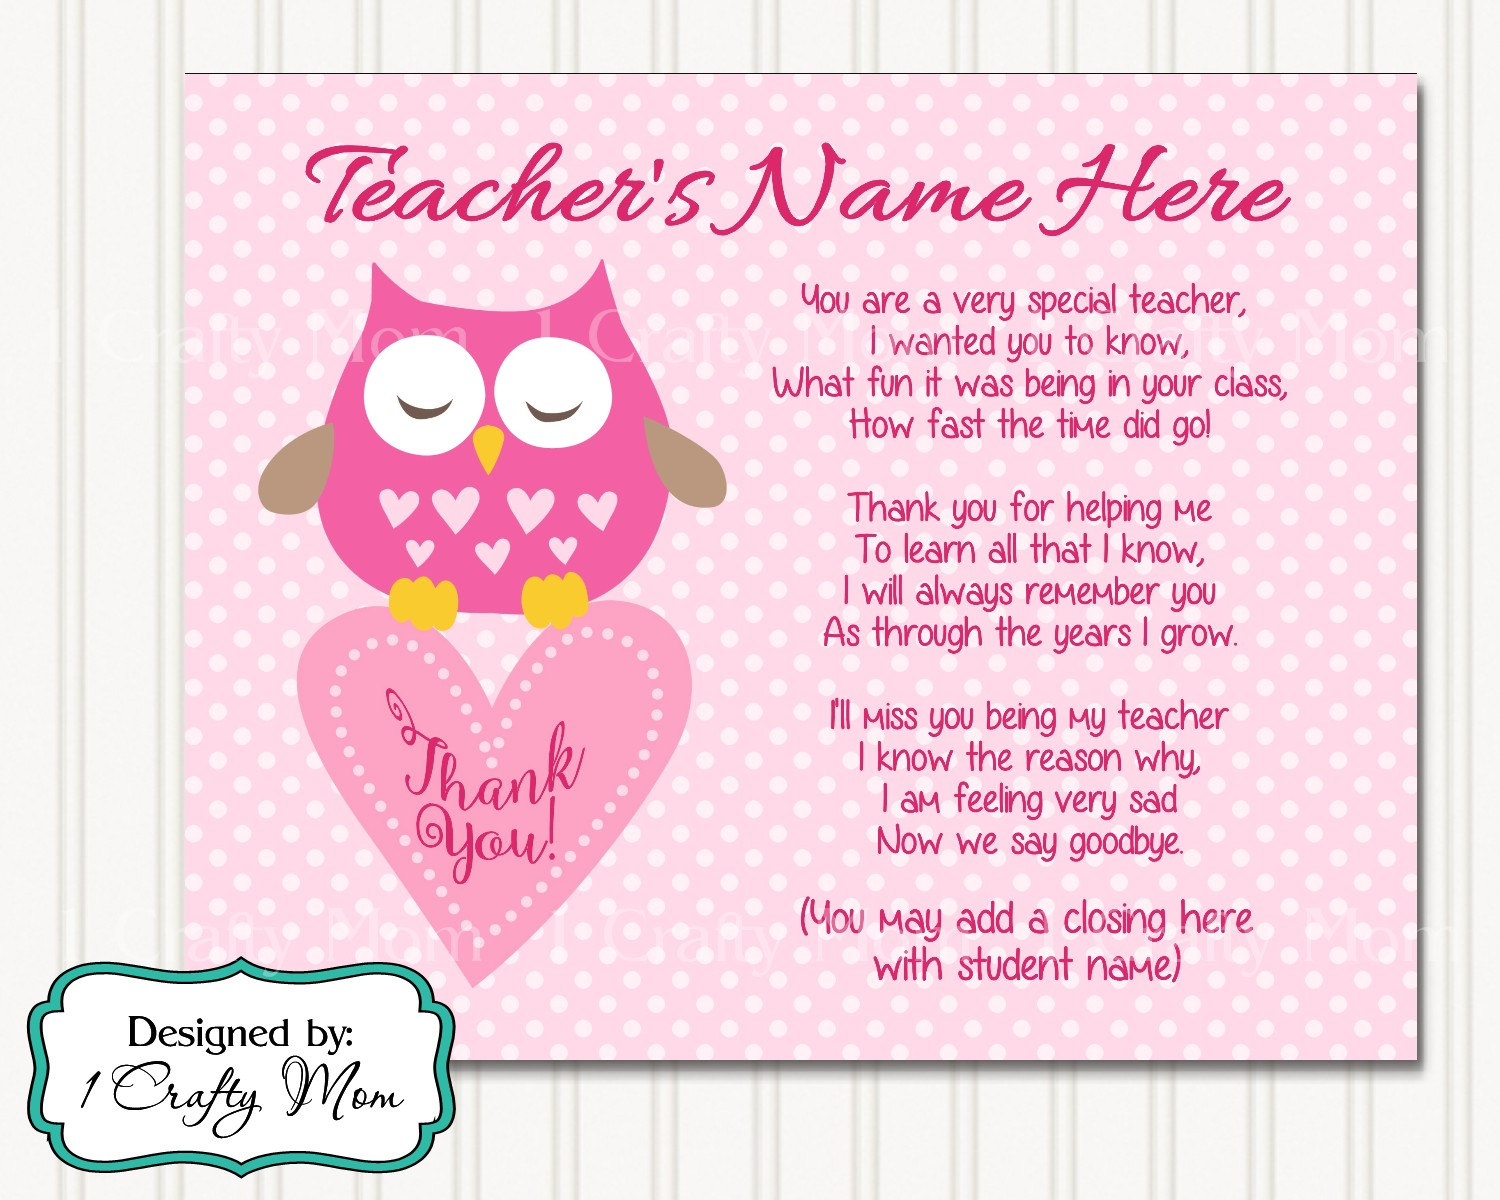 Thank you teacher poem. Poems for teachers. What is a teacher? Poem. Thank you poem to the teacher with name.